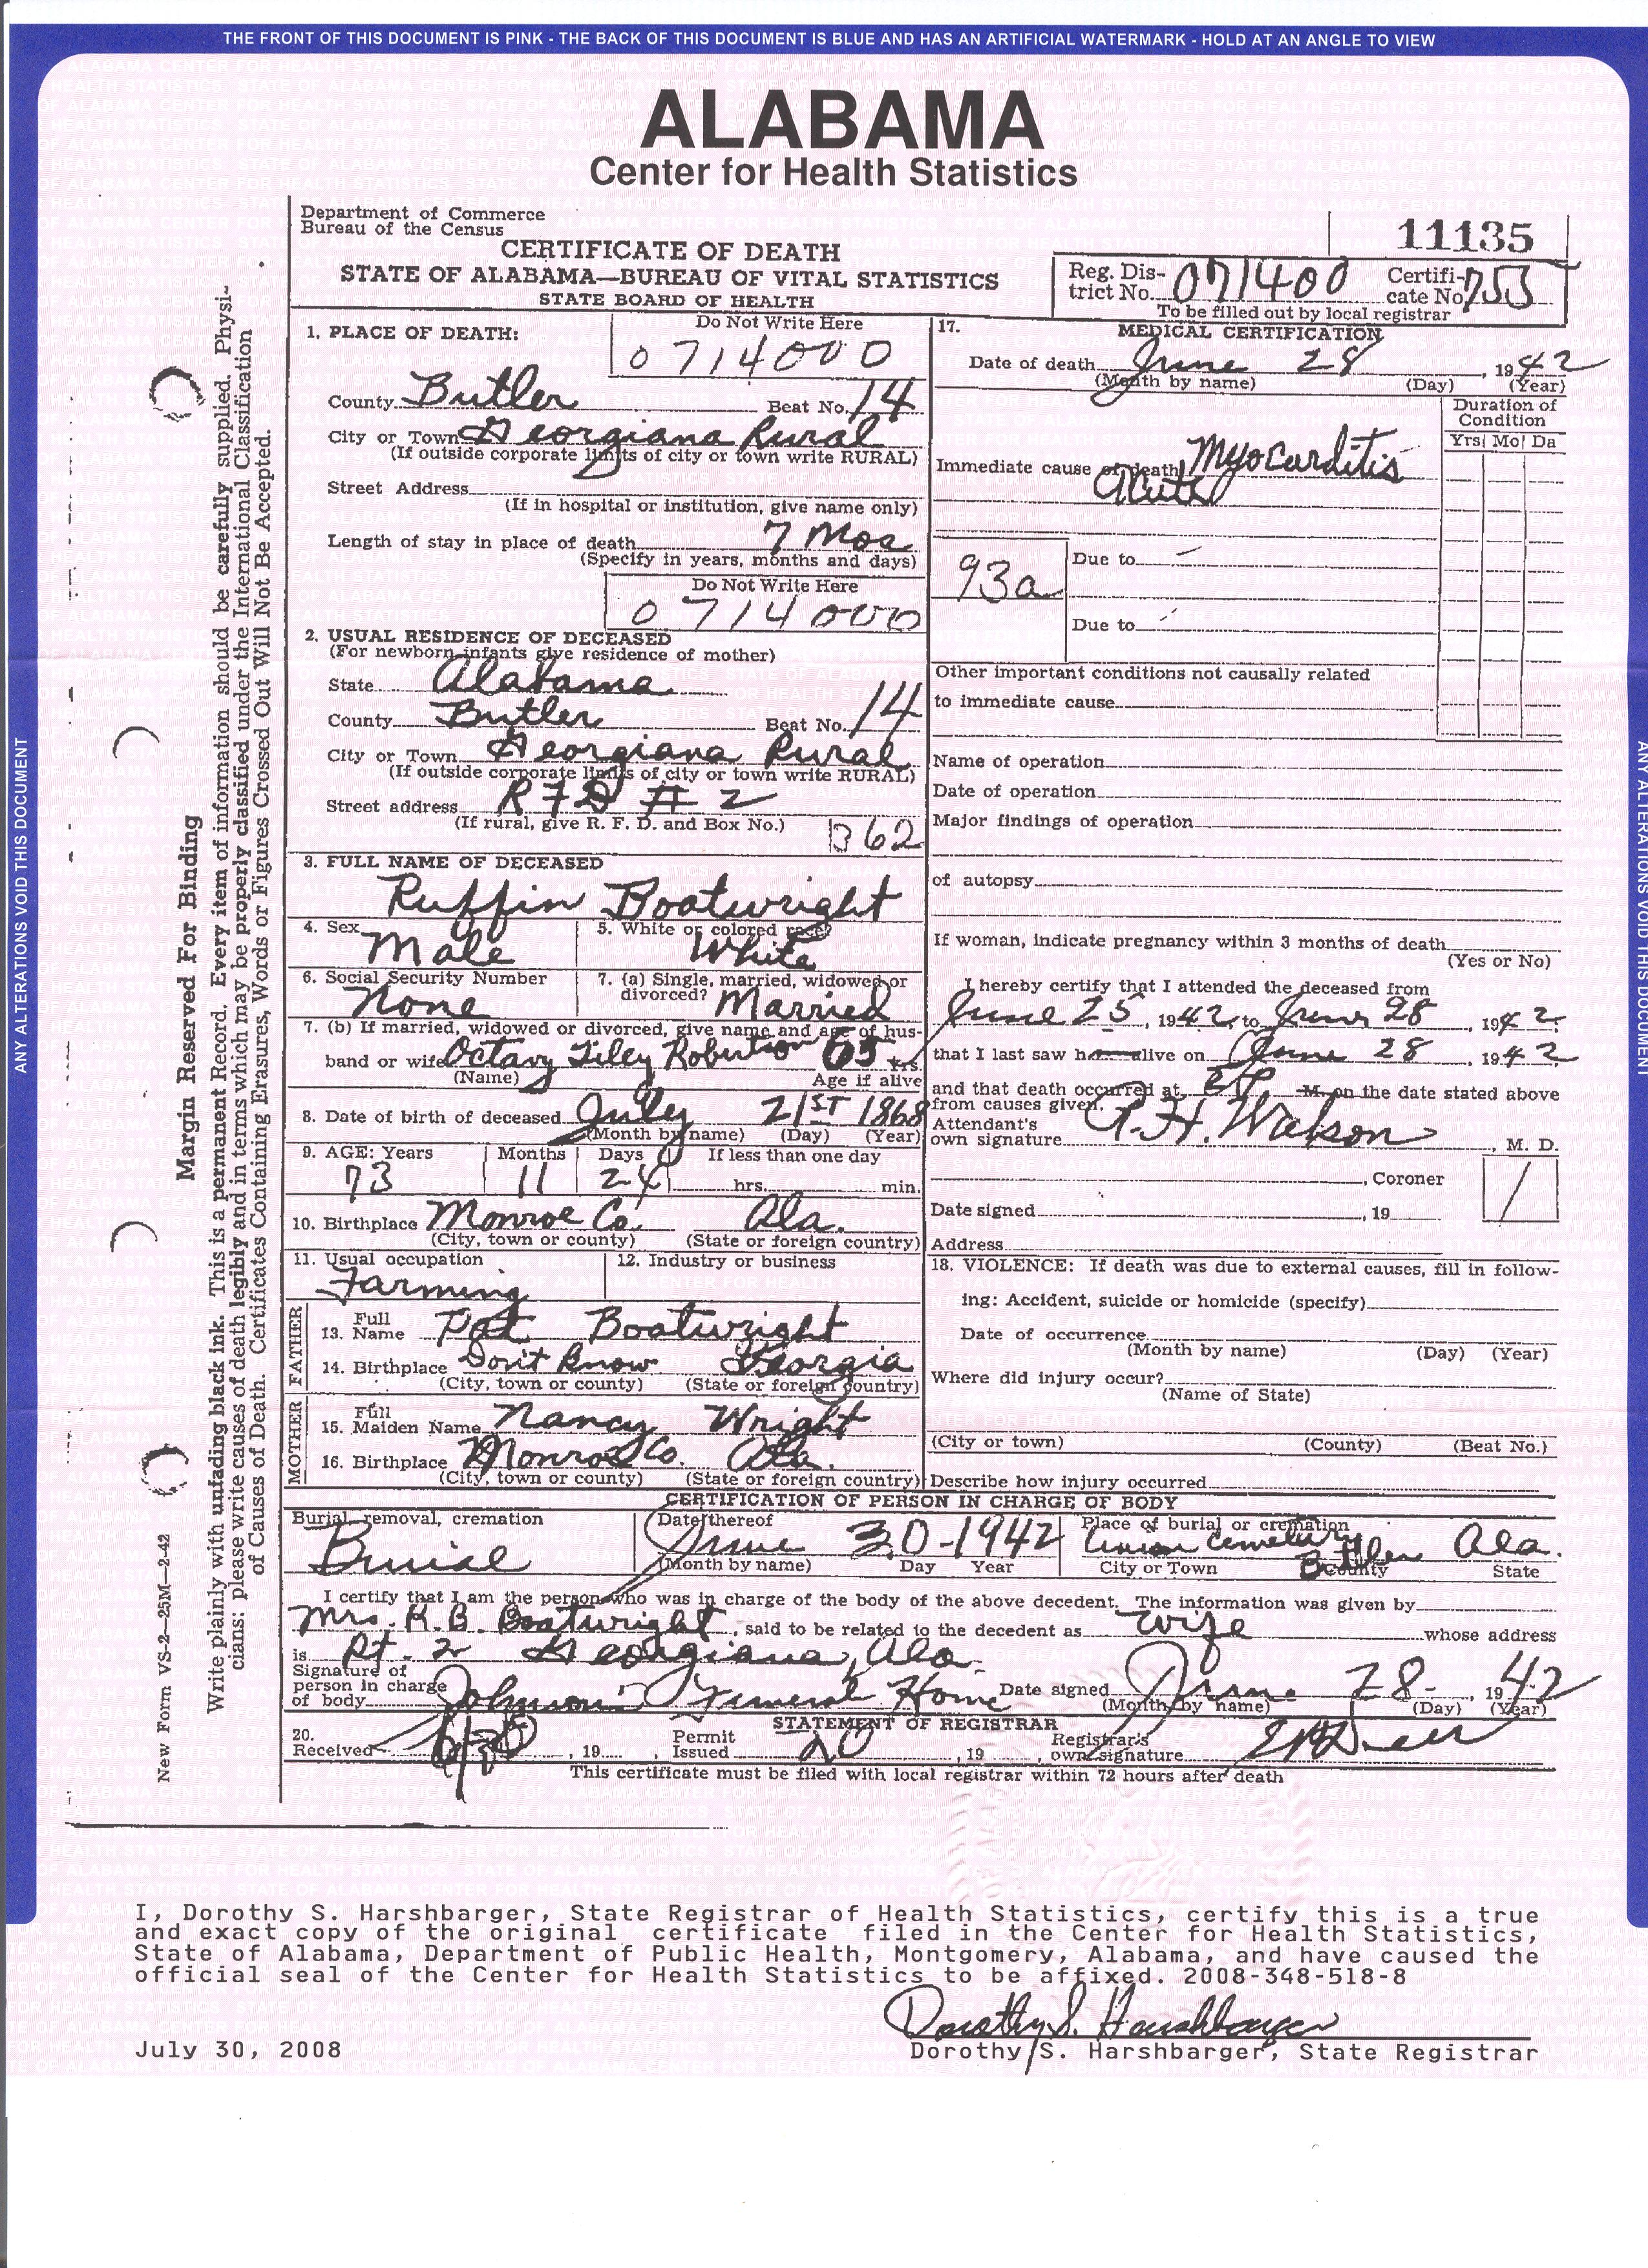 Ruffin B. Boatwright Death Certificate: